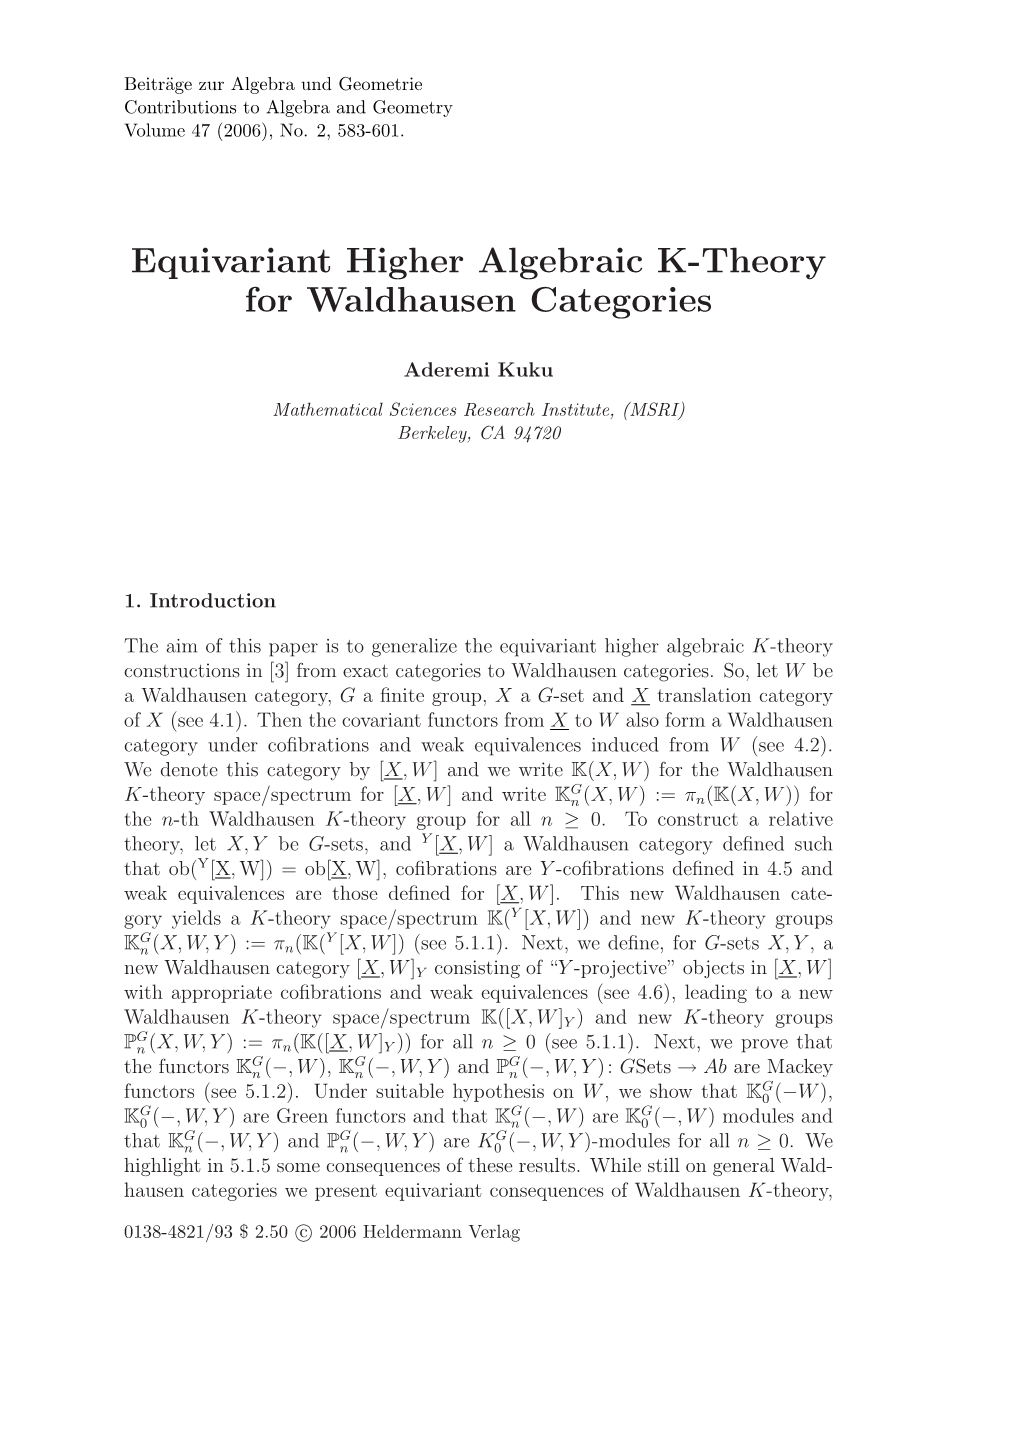 Equivariant Higher Algebraic K-Theory for Waldhausen Categories